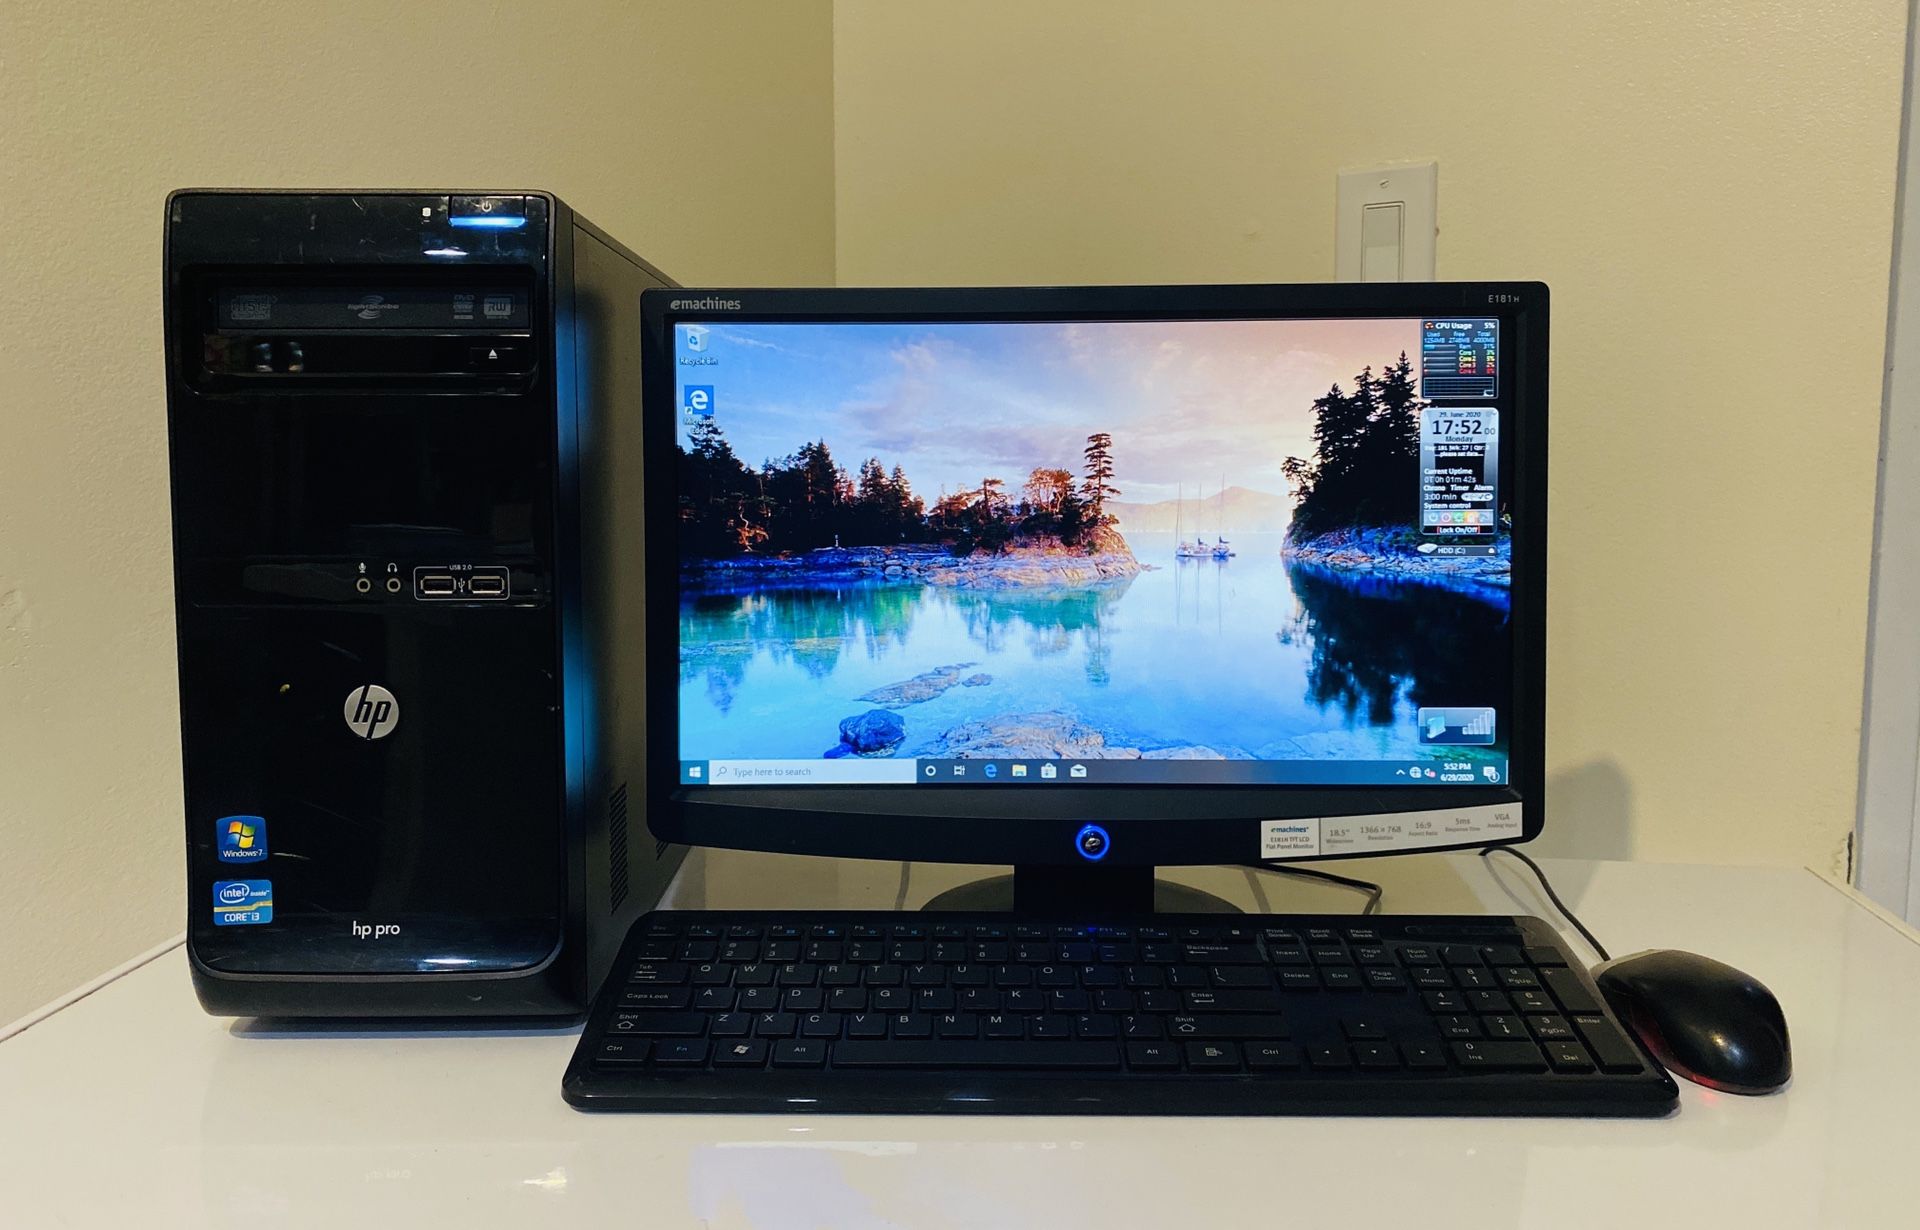 FAST HP Pro Quad Core I3 @ 3,1GHz, Dual Display Desktop Computer. 250GB HDD, 4GB RAM, HD Graphics, DVD RW, 6 USB Port, 19” Monit/Keyb/Mouse, Win10 Pro